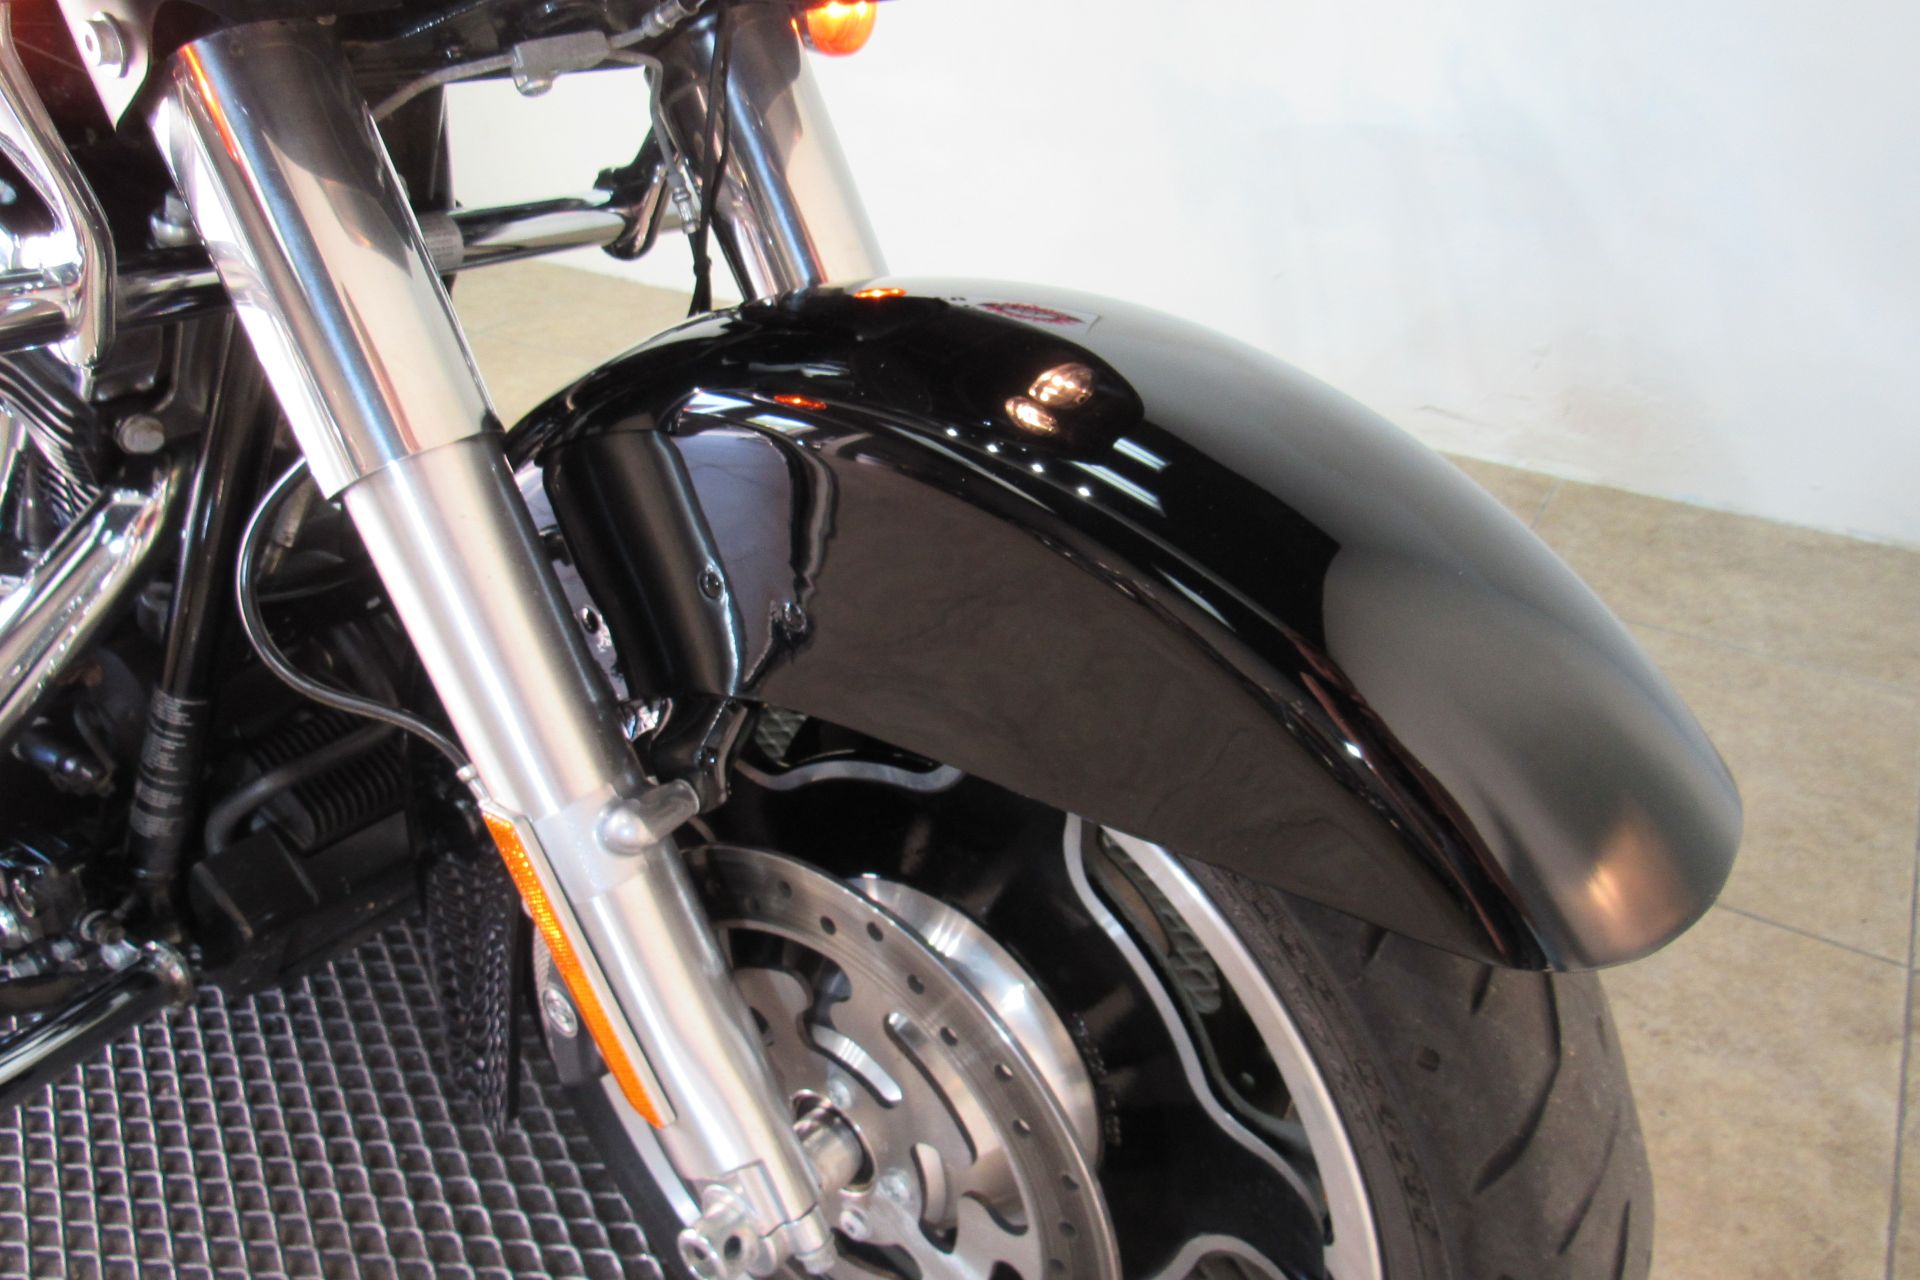 2013 Harley-Davidson Road Glide® Custom in Temecula, California - Photo 18